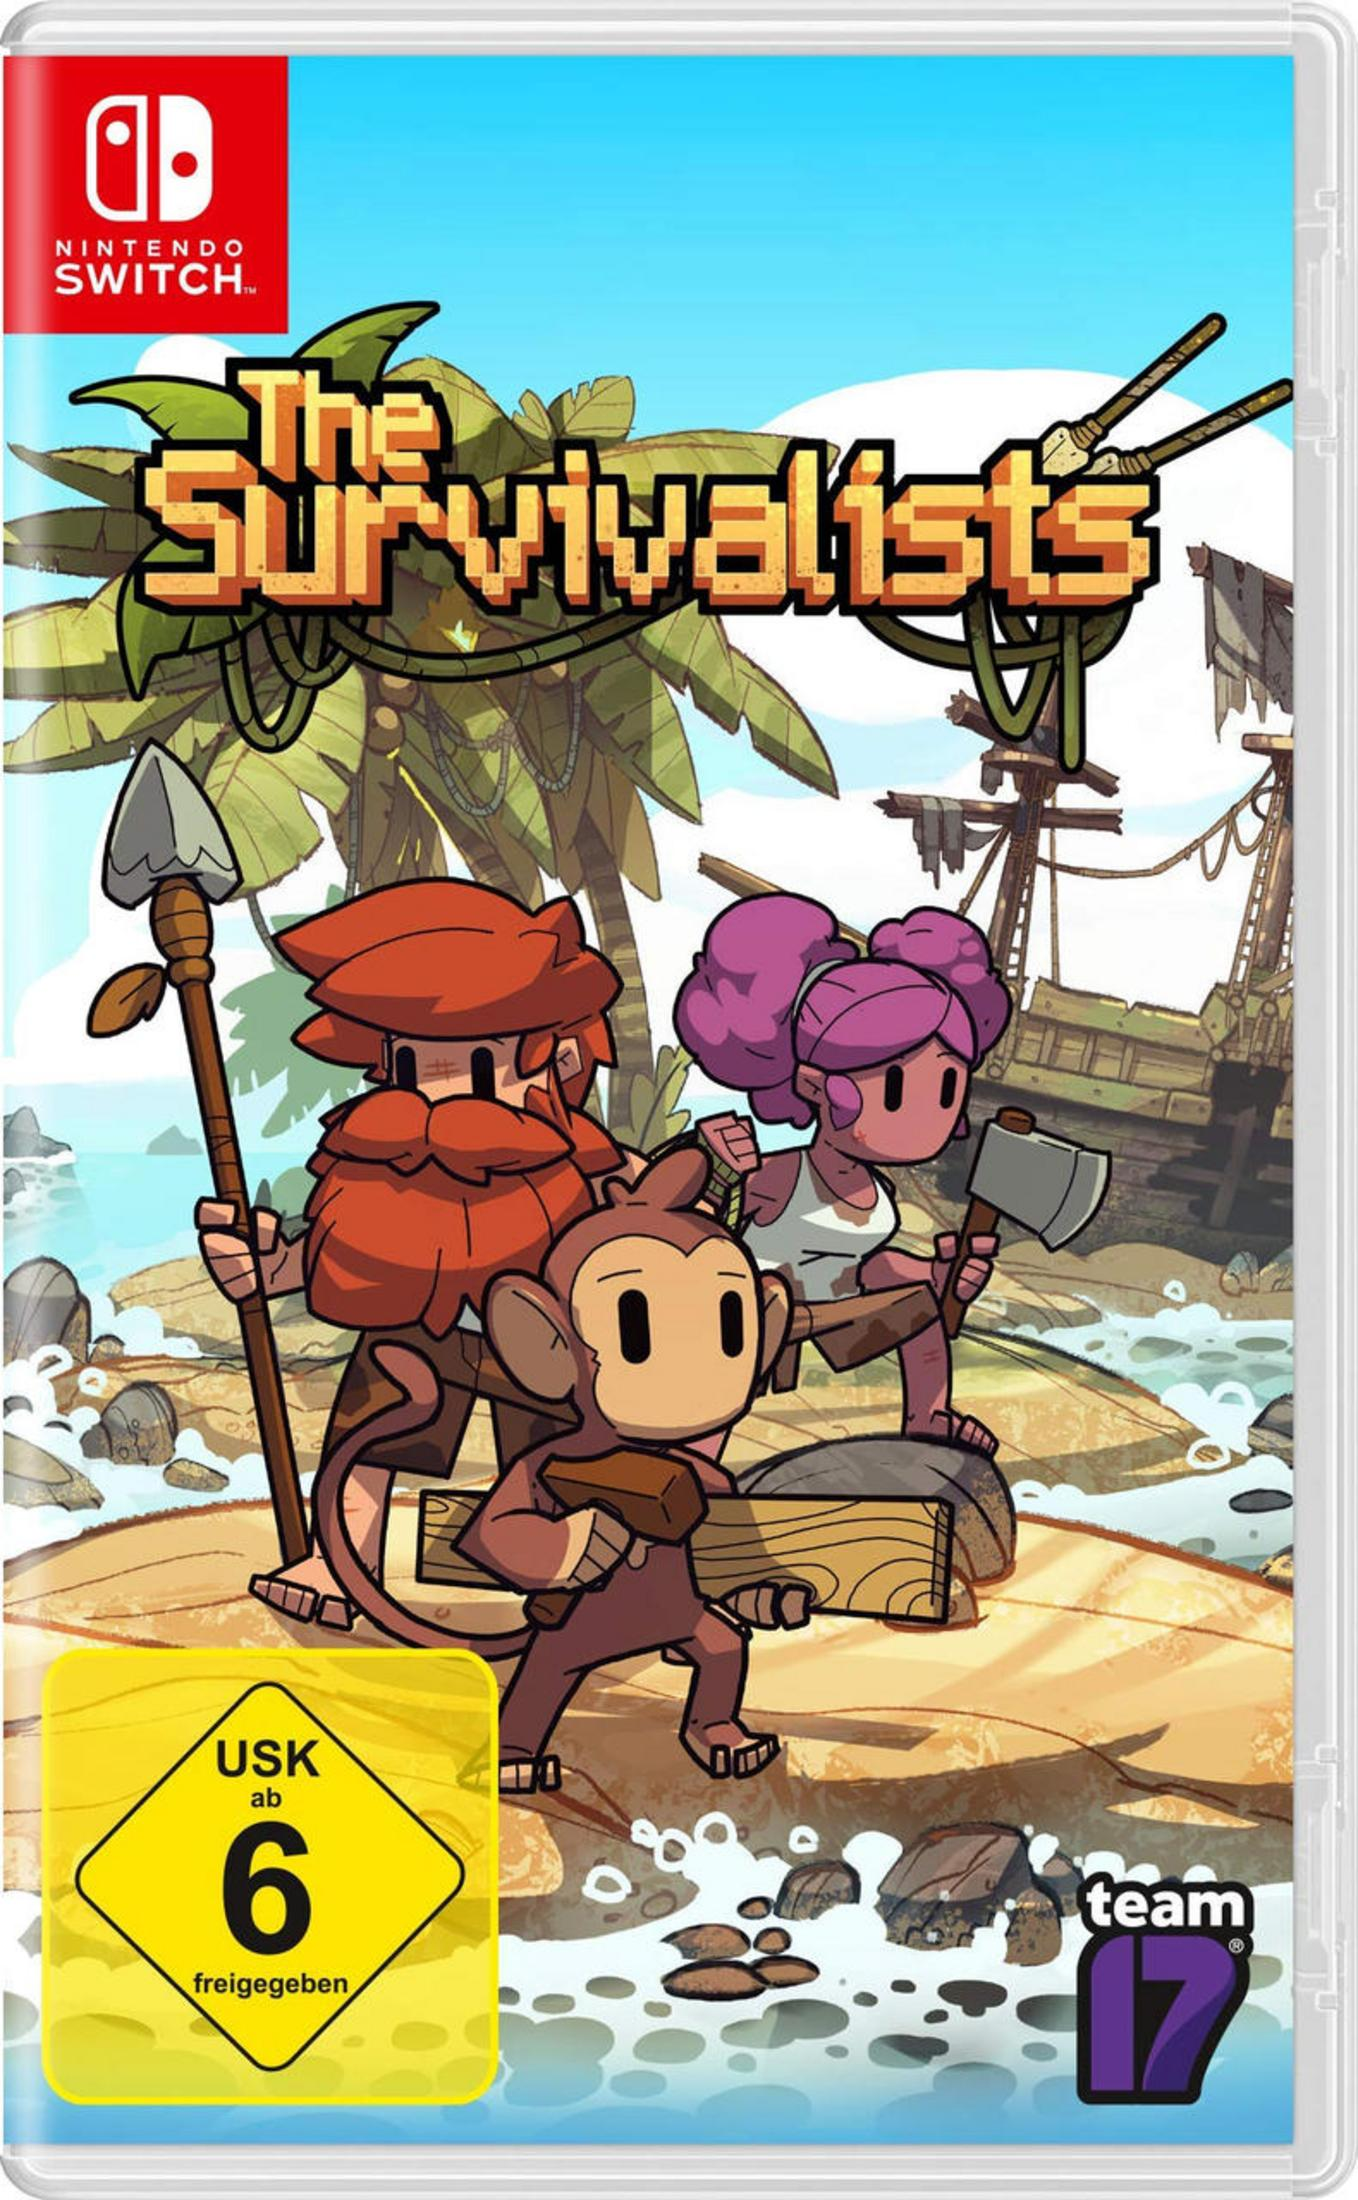 Switch] Switch Survivalists [Nintendo -